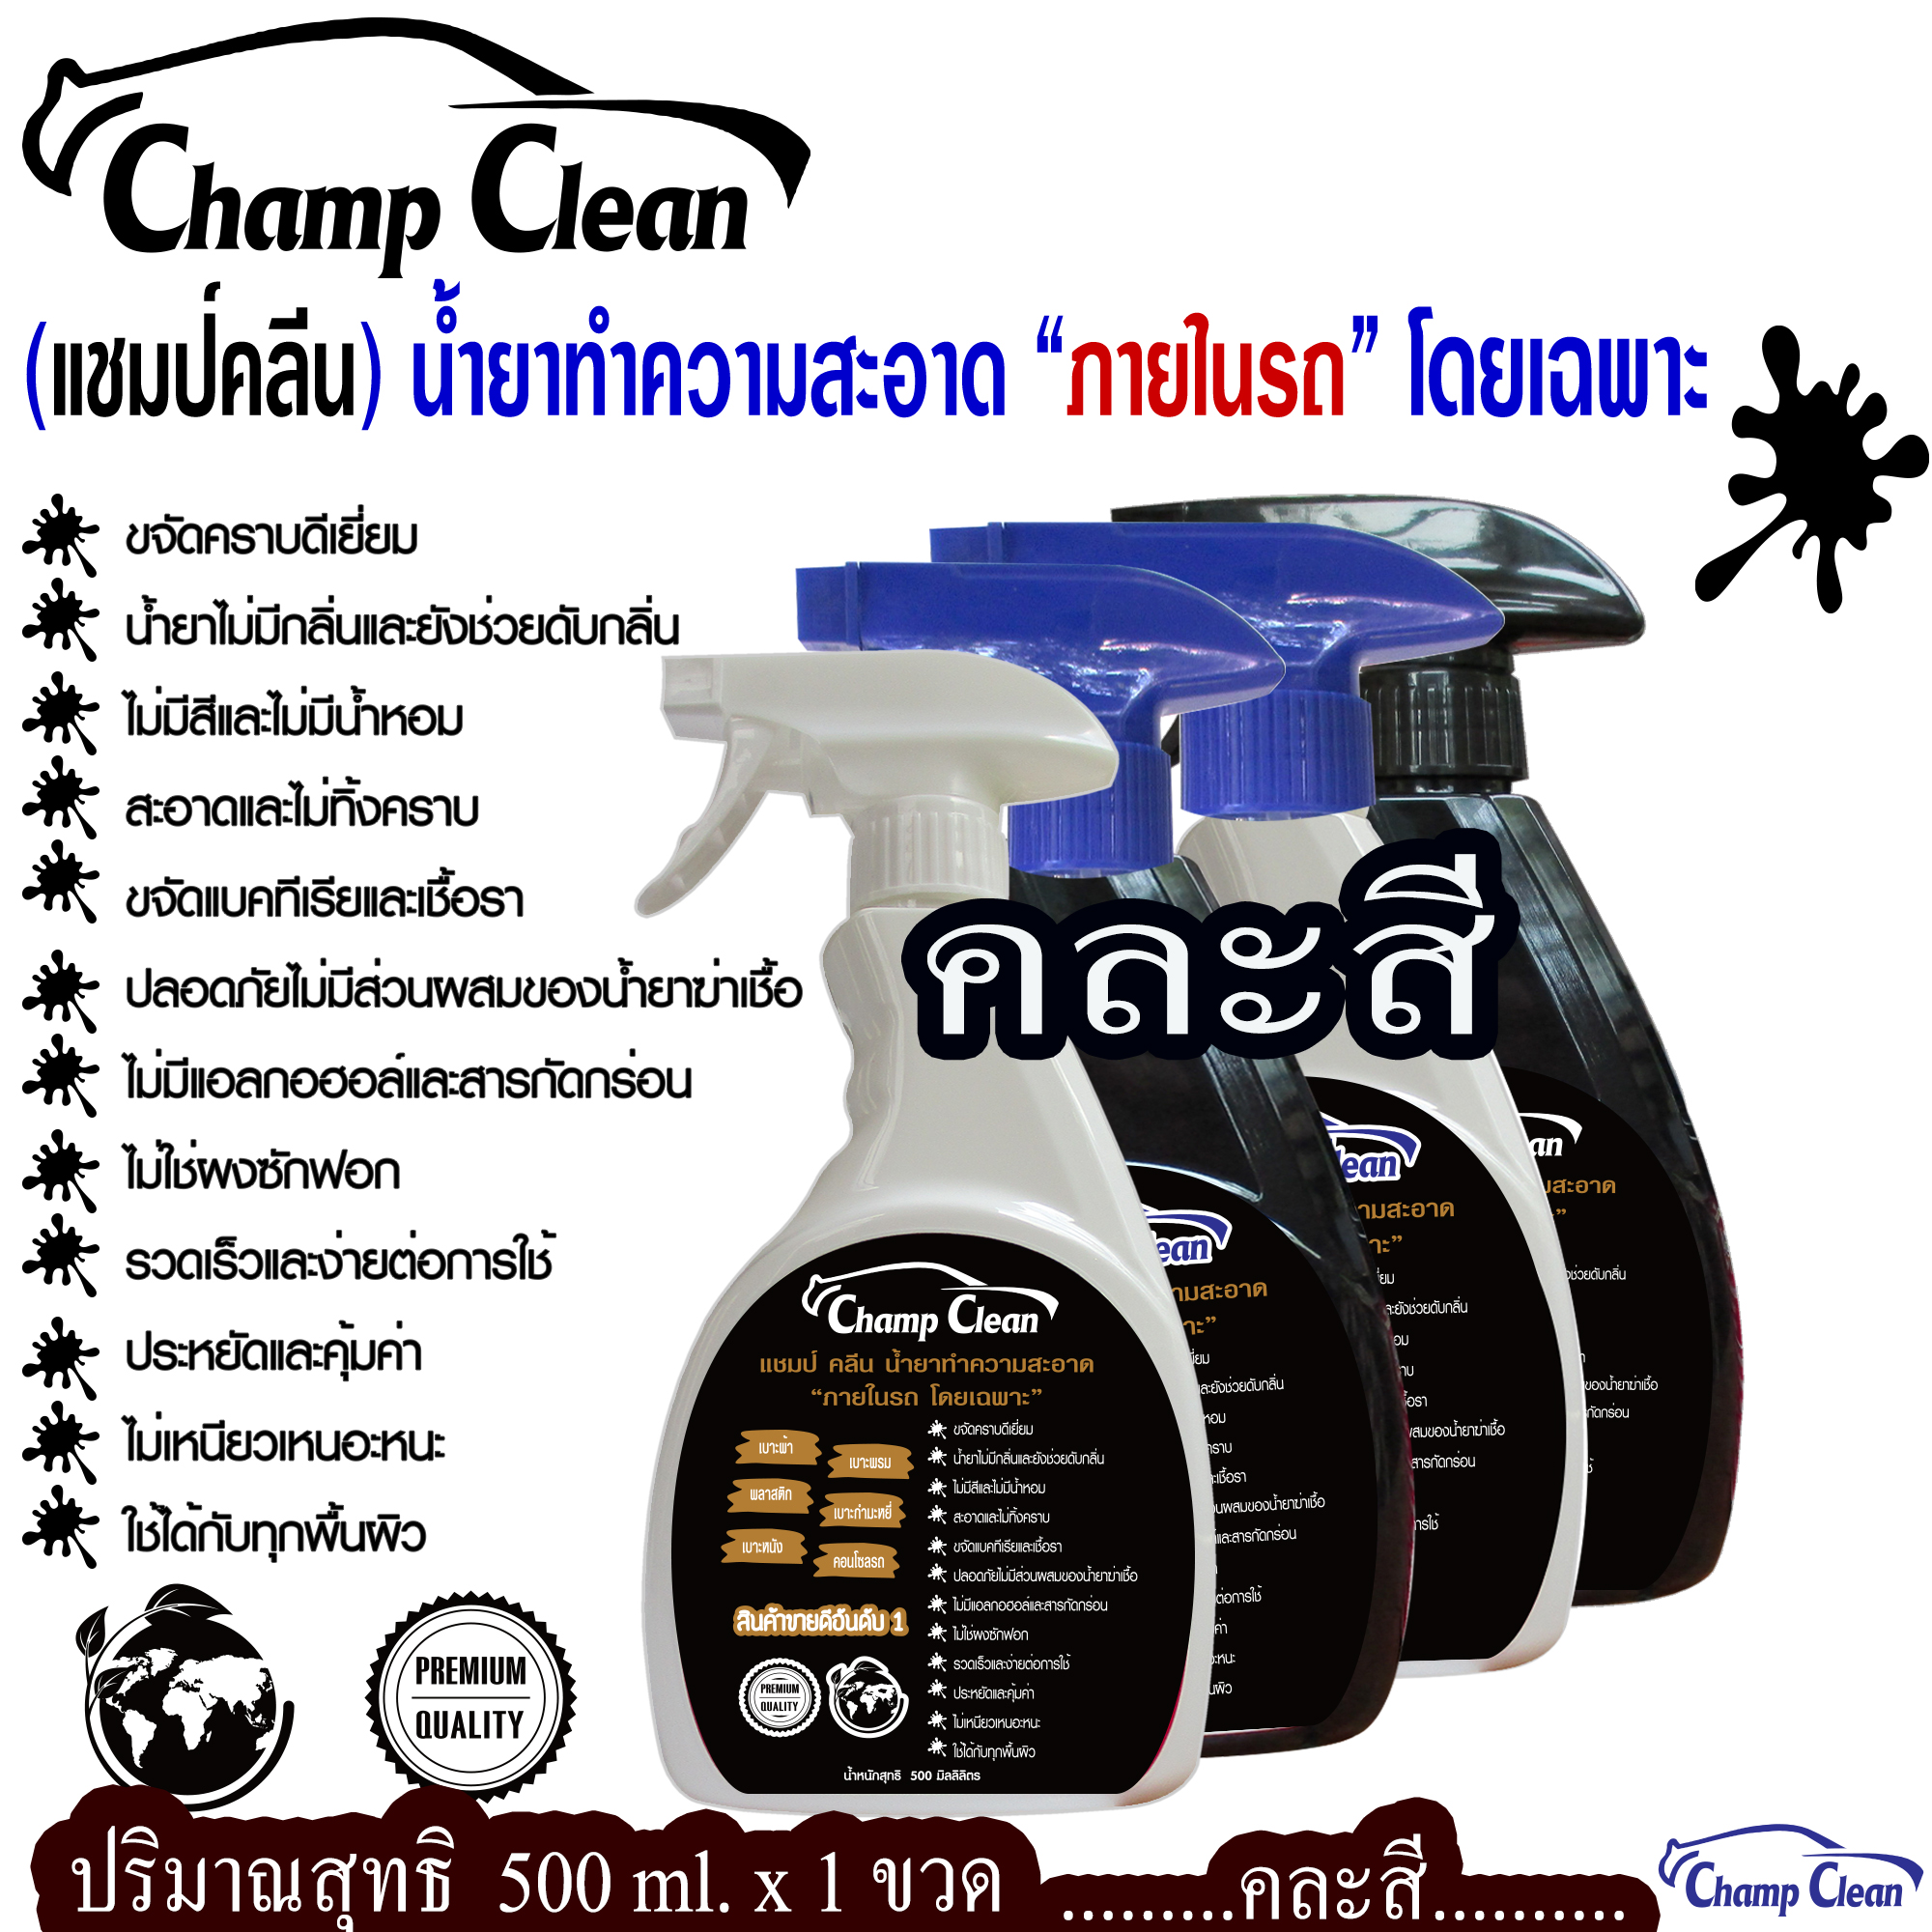 Champ Clean สเปรย์ทำความสะอาดภายในรถยนต์ พรม ผ้า กำมะหยี่ หนัง และอุปกรณ์ภายในรถ ใช้ได้กับทุกพื้นผิว 500 ml.